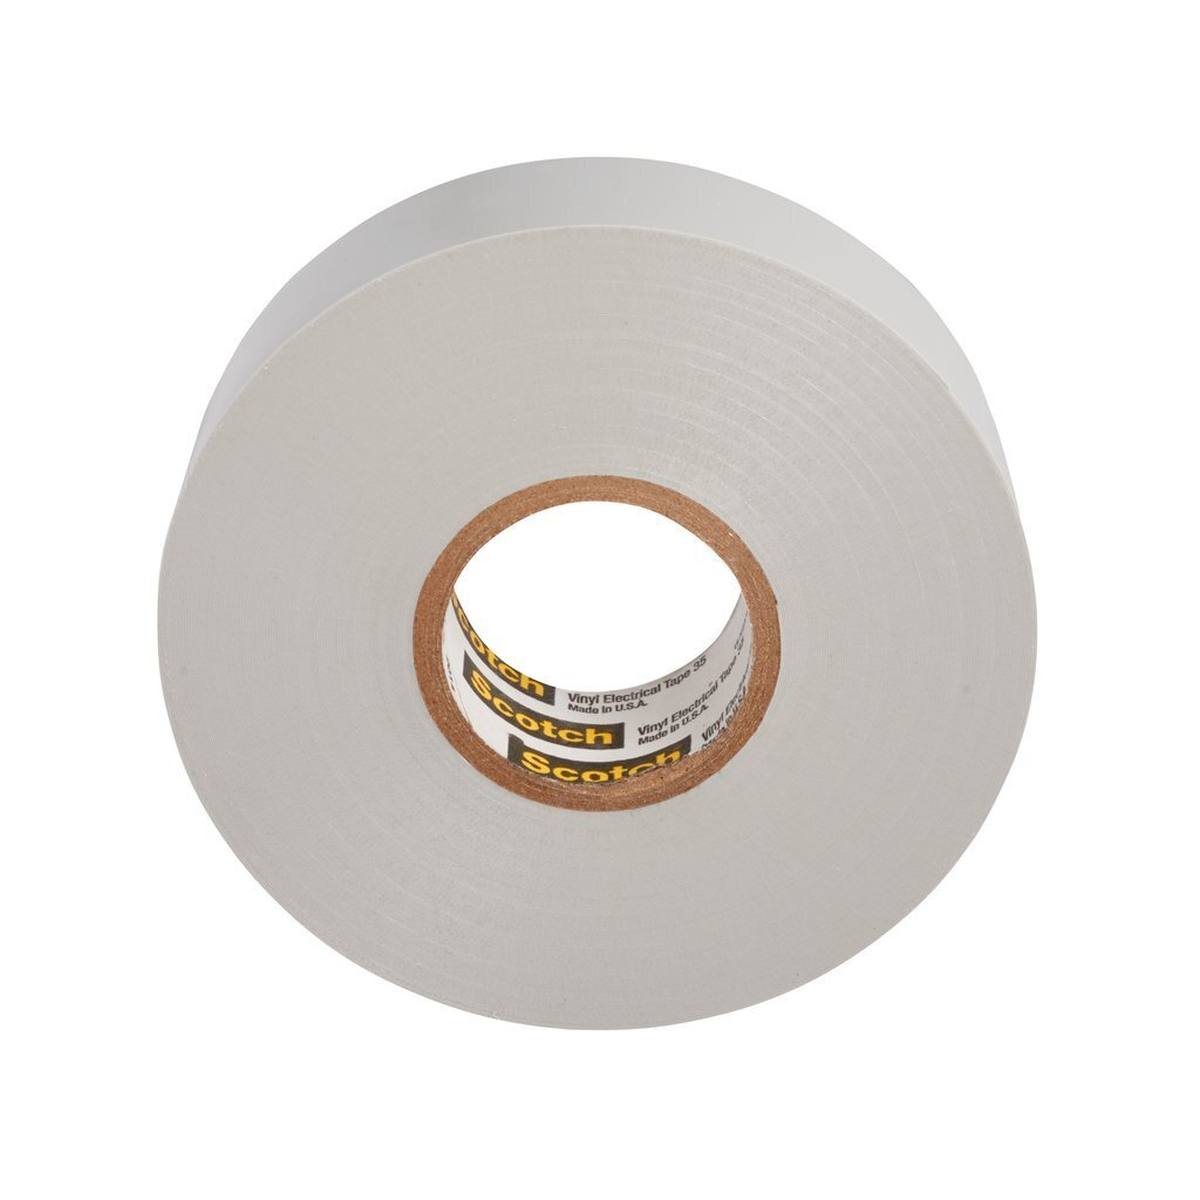 3M Scotch 35 Vinyl Electrical Insulating Tape, gray, 19 mm x 20 m, 0.18 mm